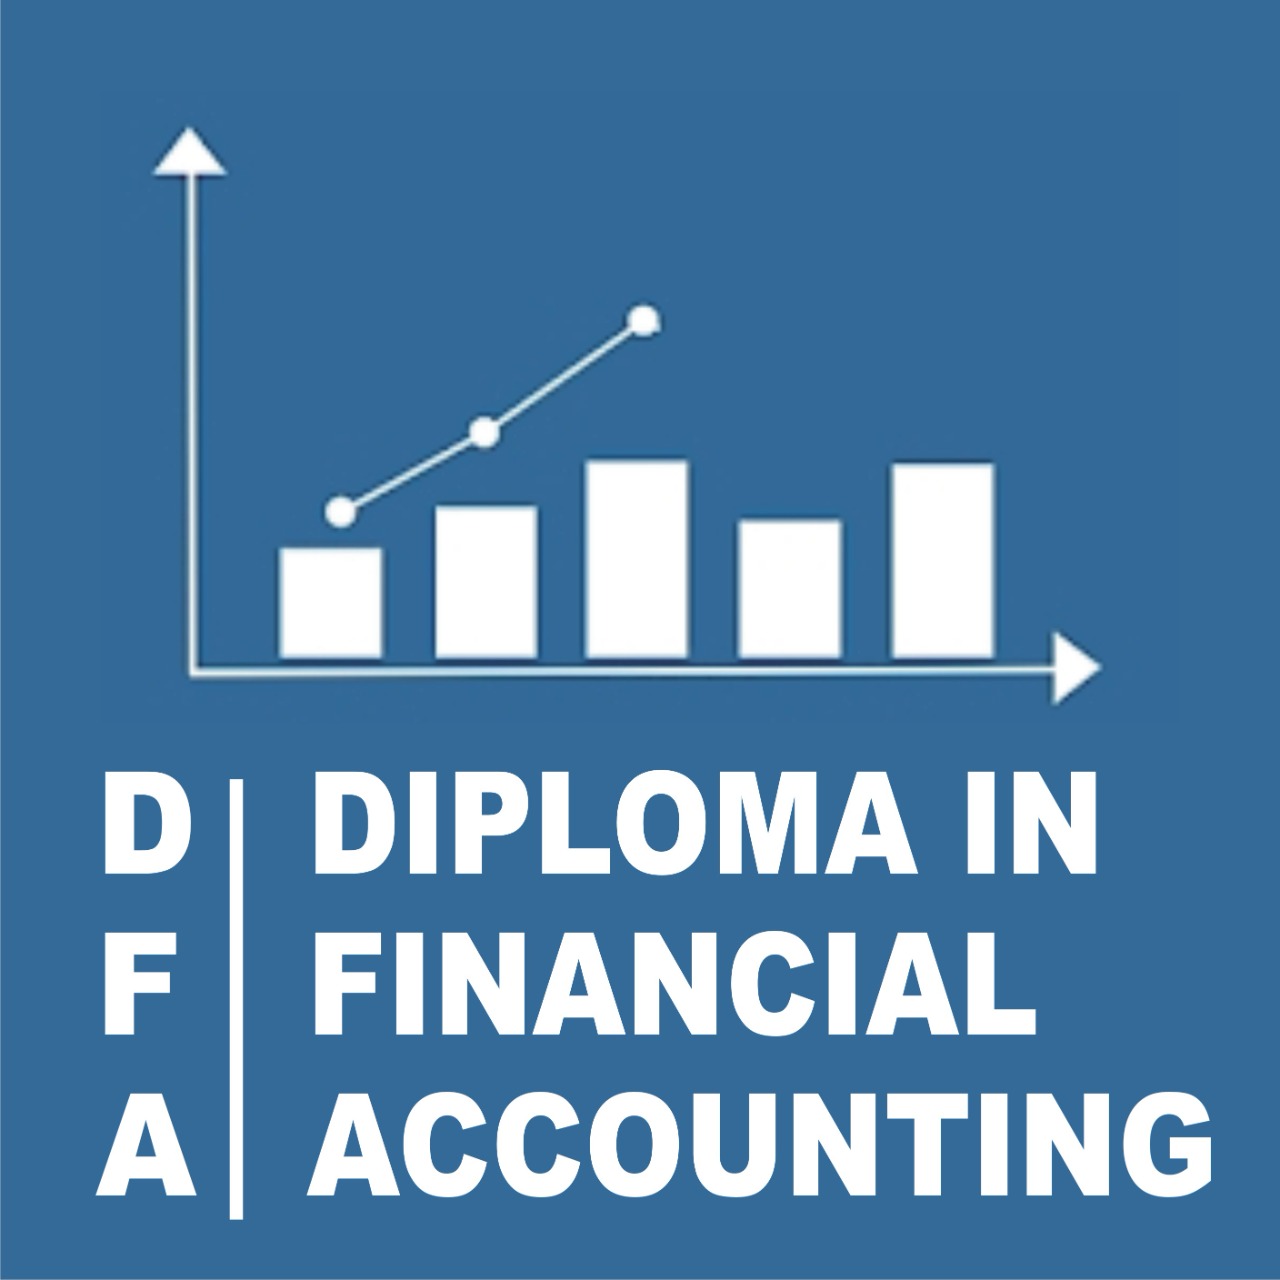 DIPLOMA IN FINANCIAL ACCOUNTING